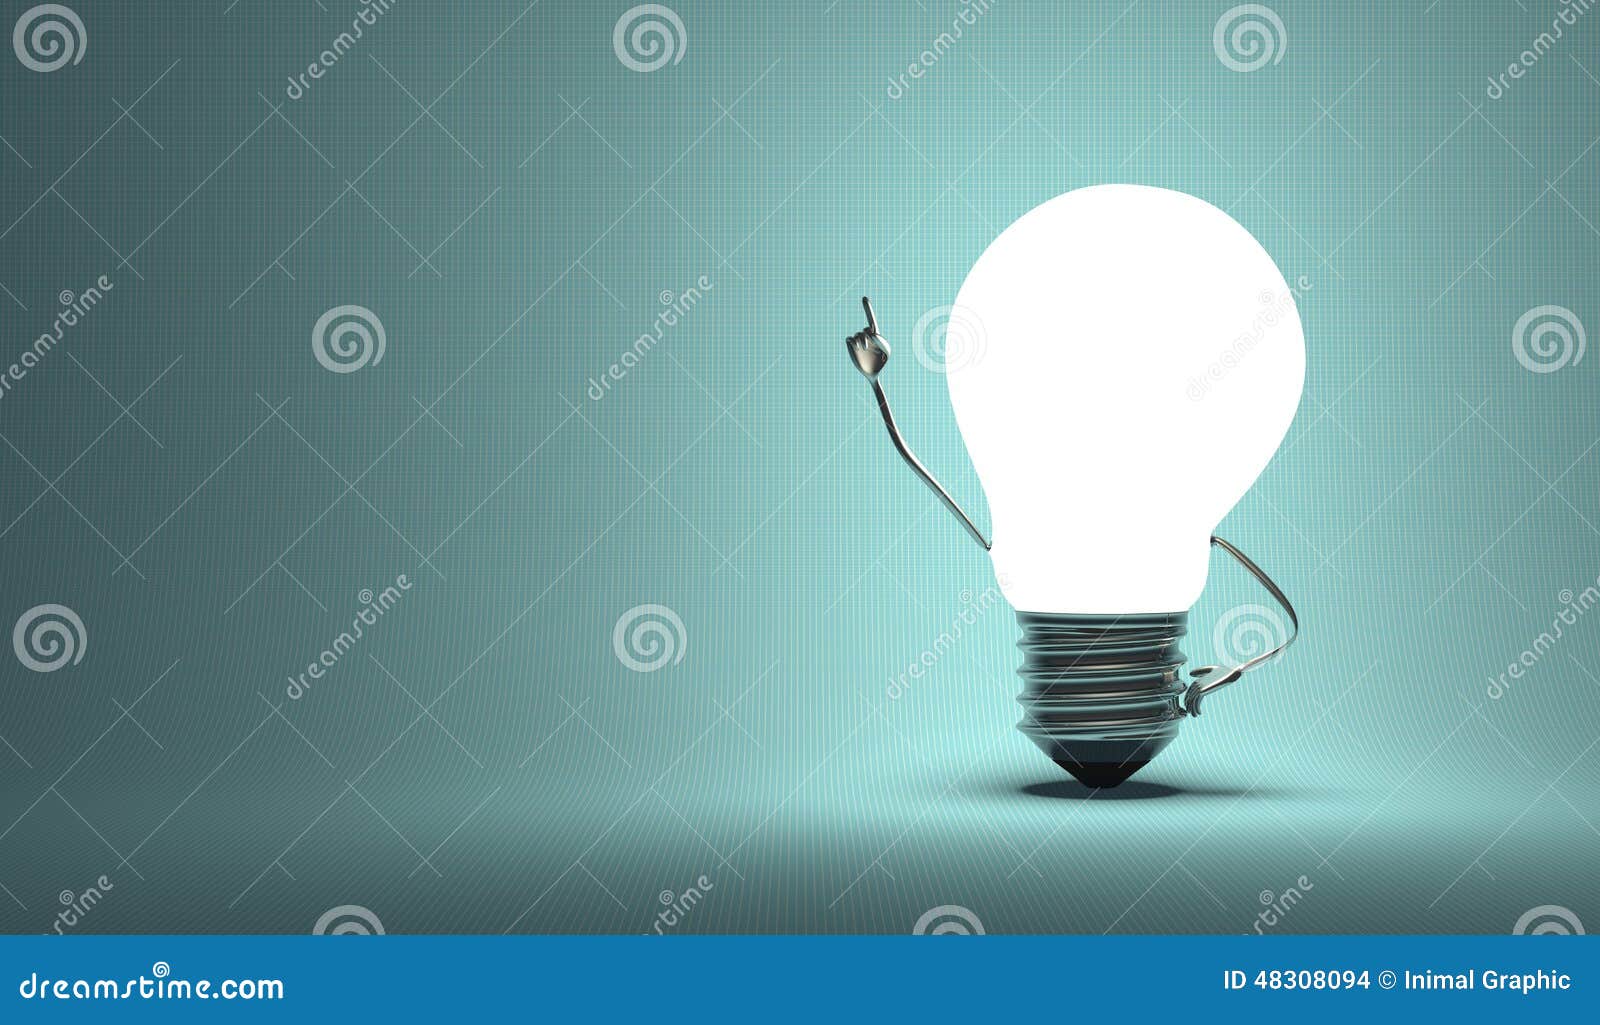 light bulb character, aha moment, squared blue background